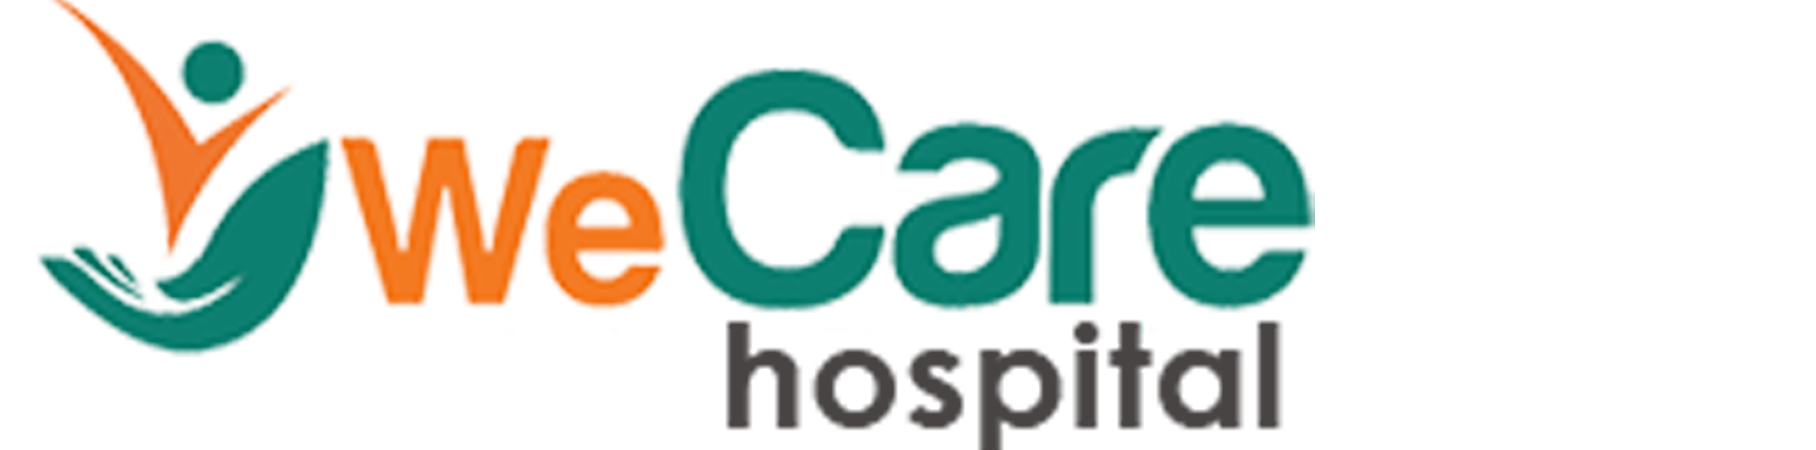 We Care Hospital|Hospitals|Medical Services